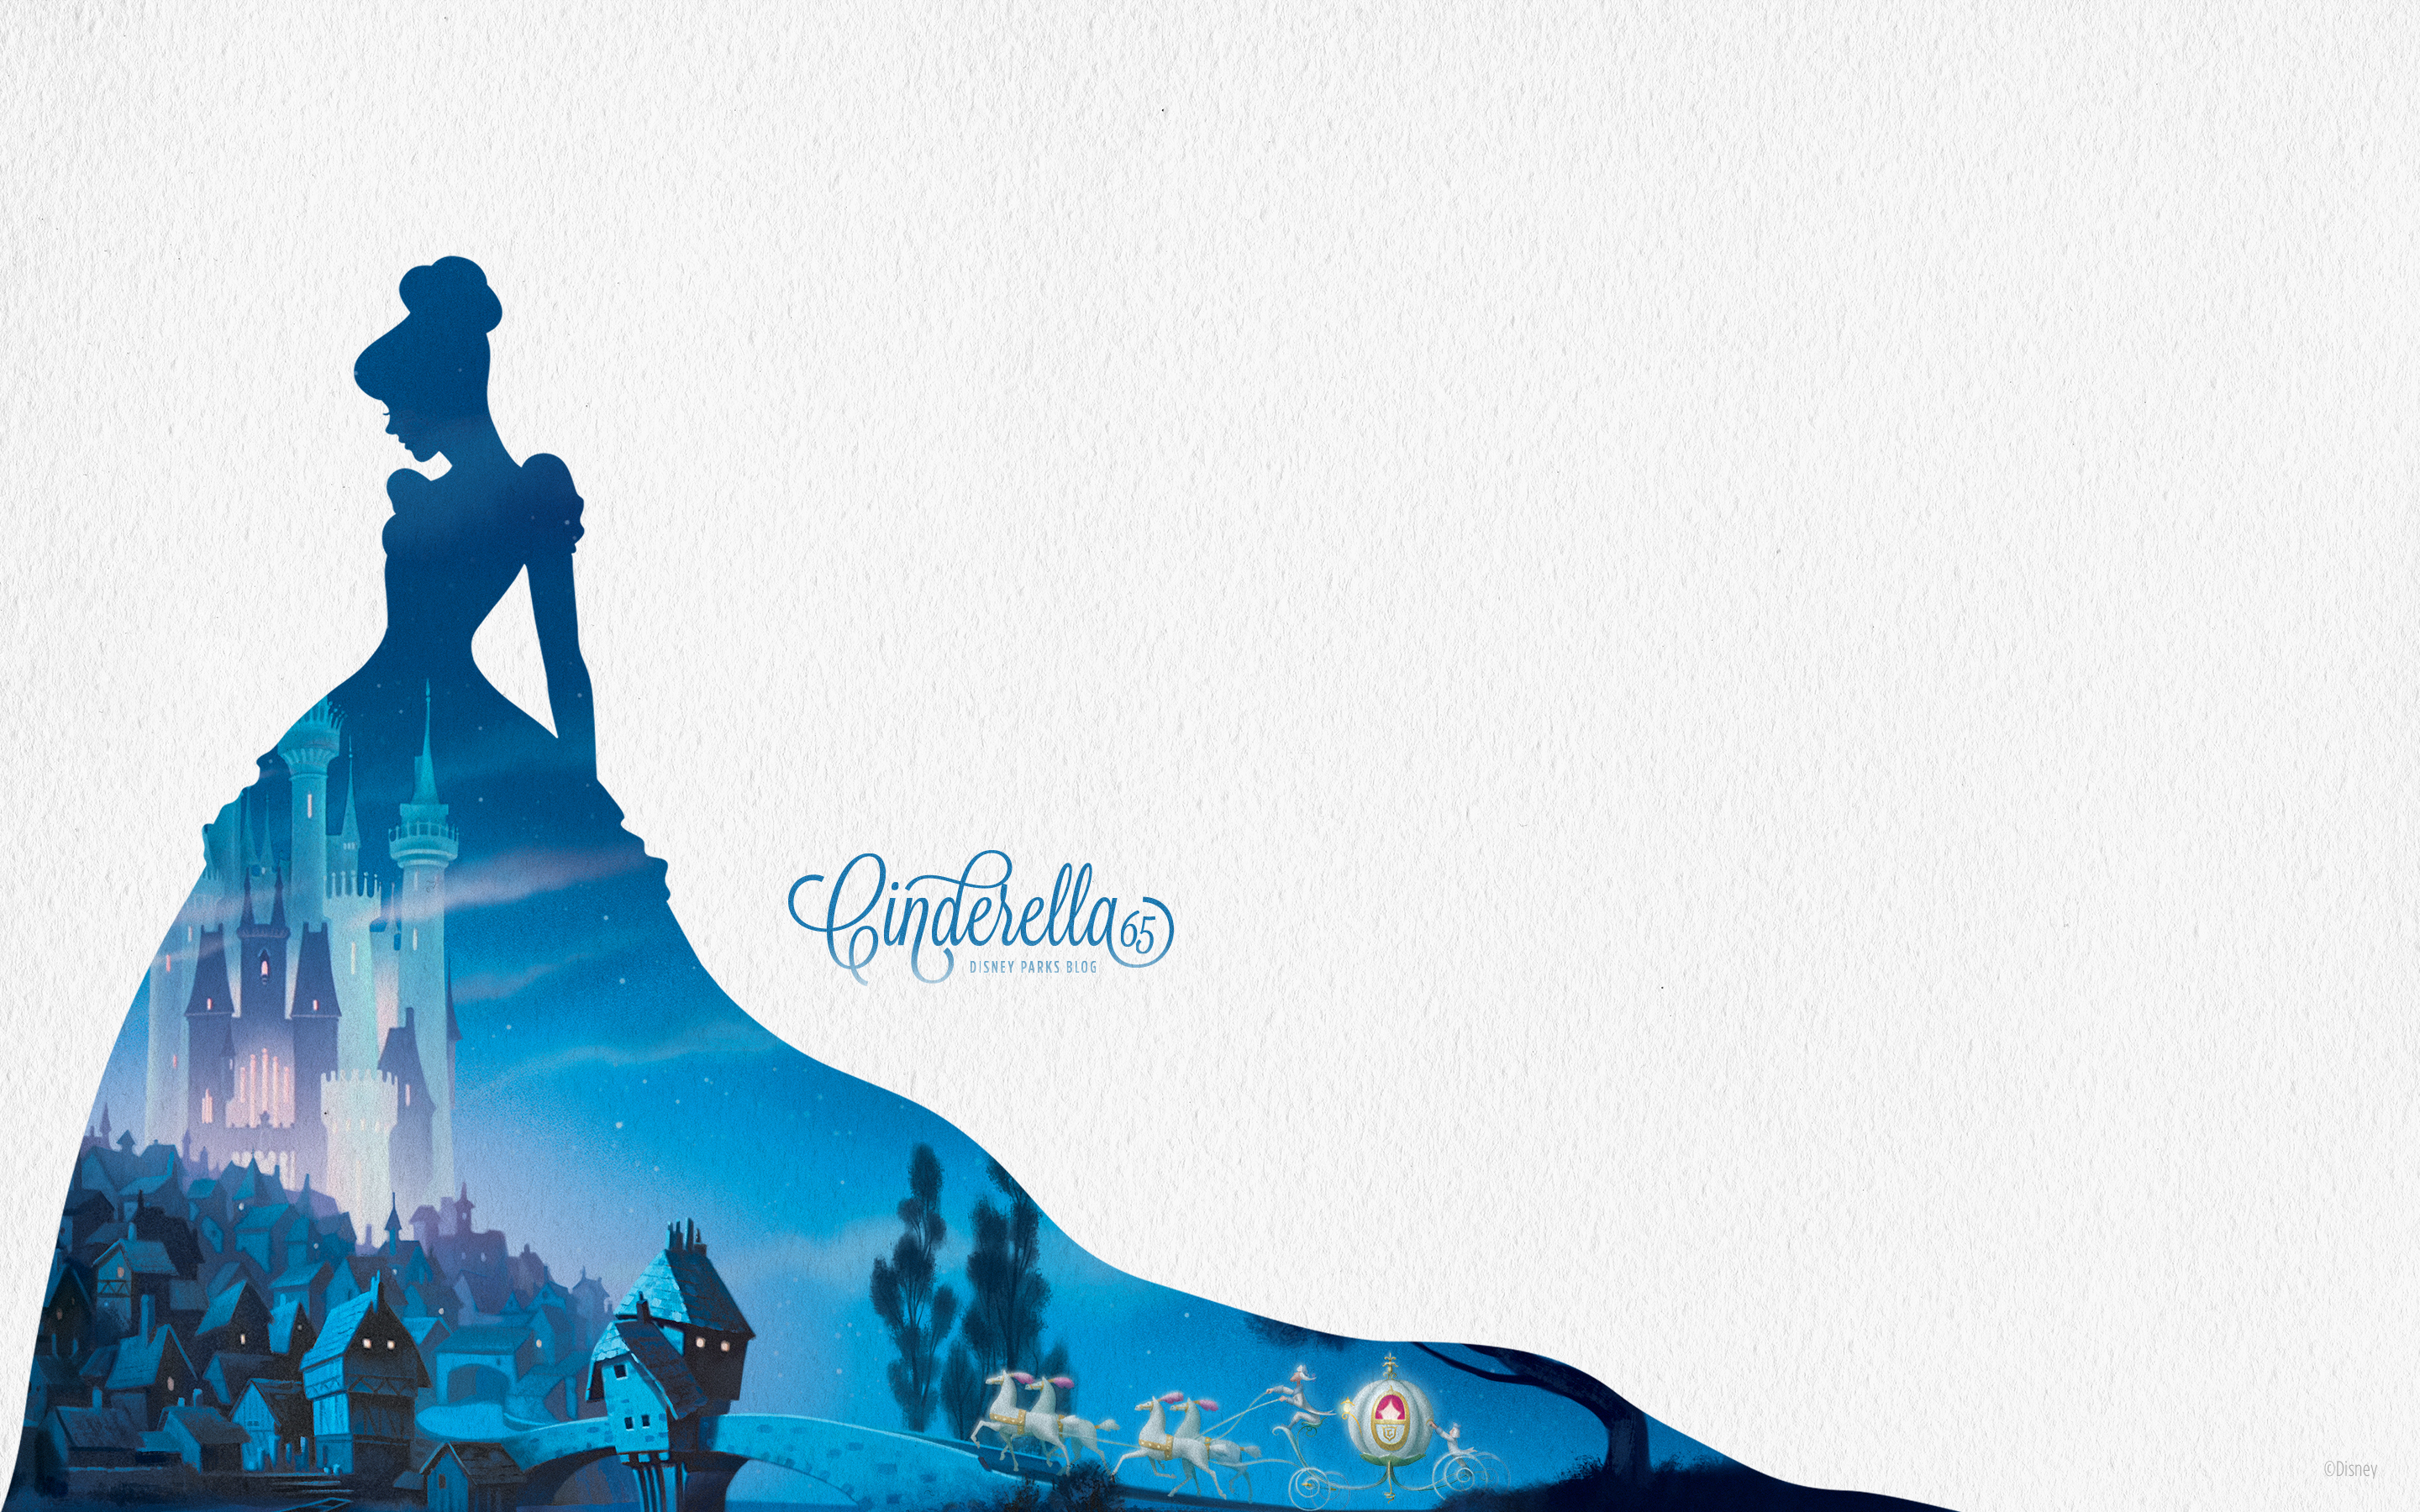 Wallpaper ID 549885  1080P desktop disney image tales princess  fairy wallpaper cinderella hd free download